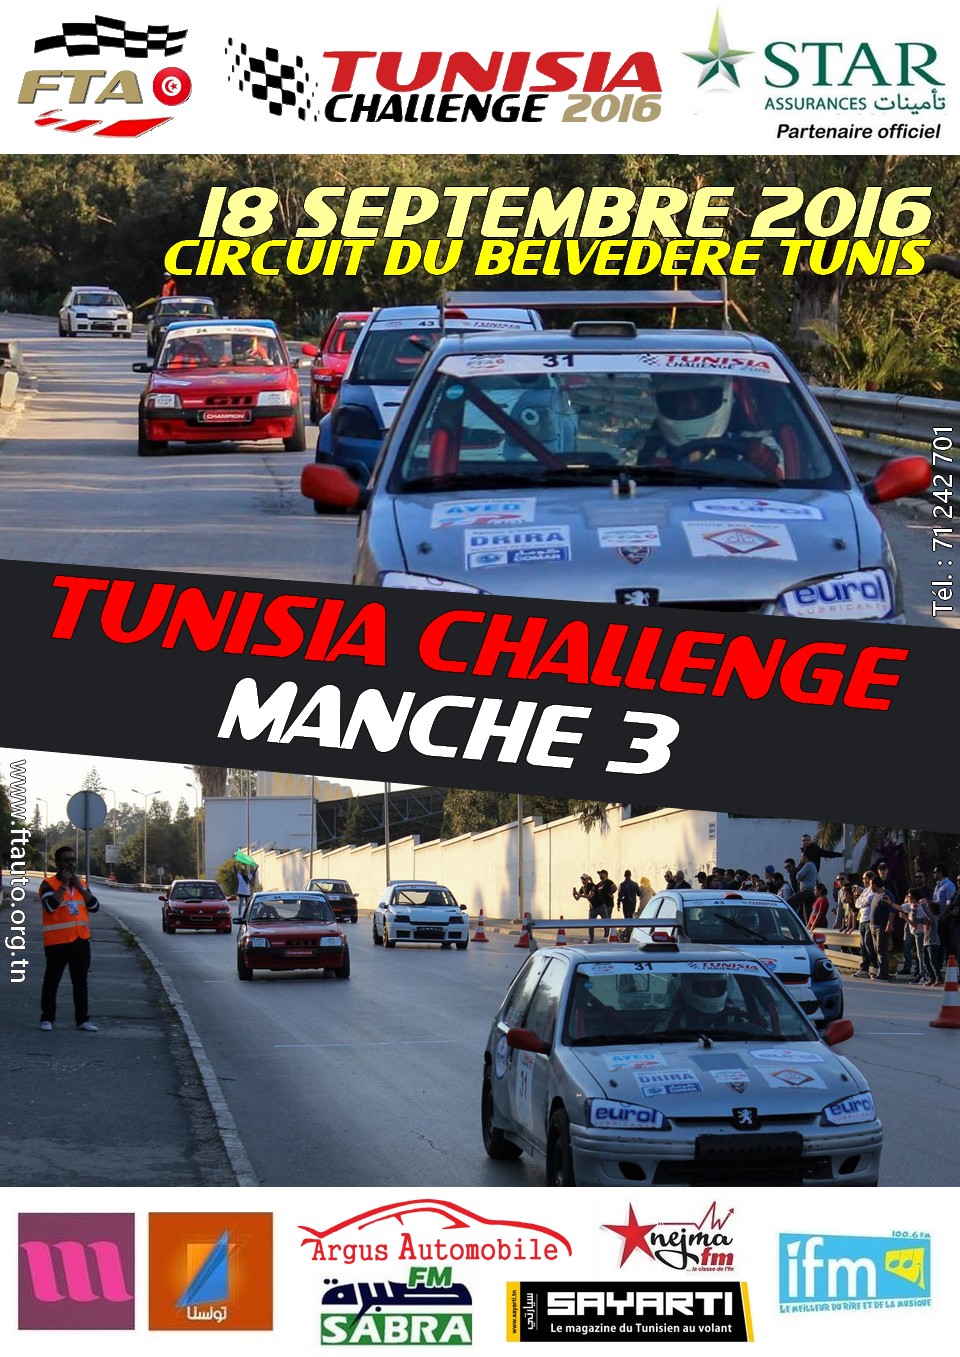 Manche 3 – Tunisia Challenge 2016